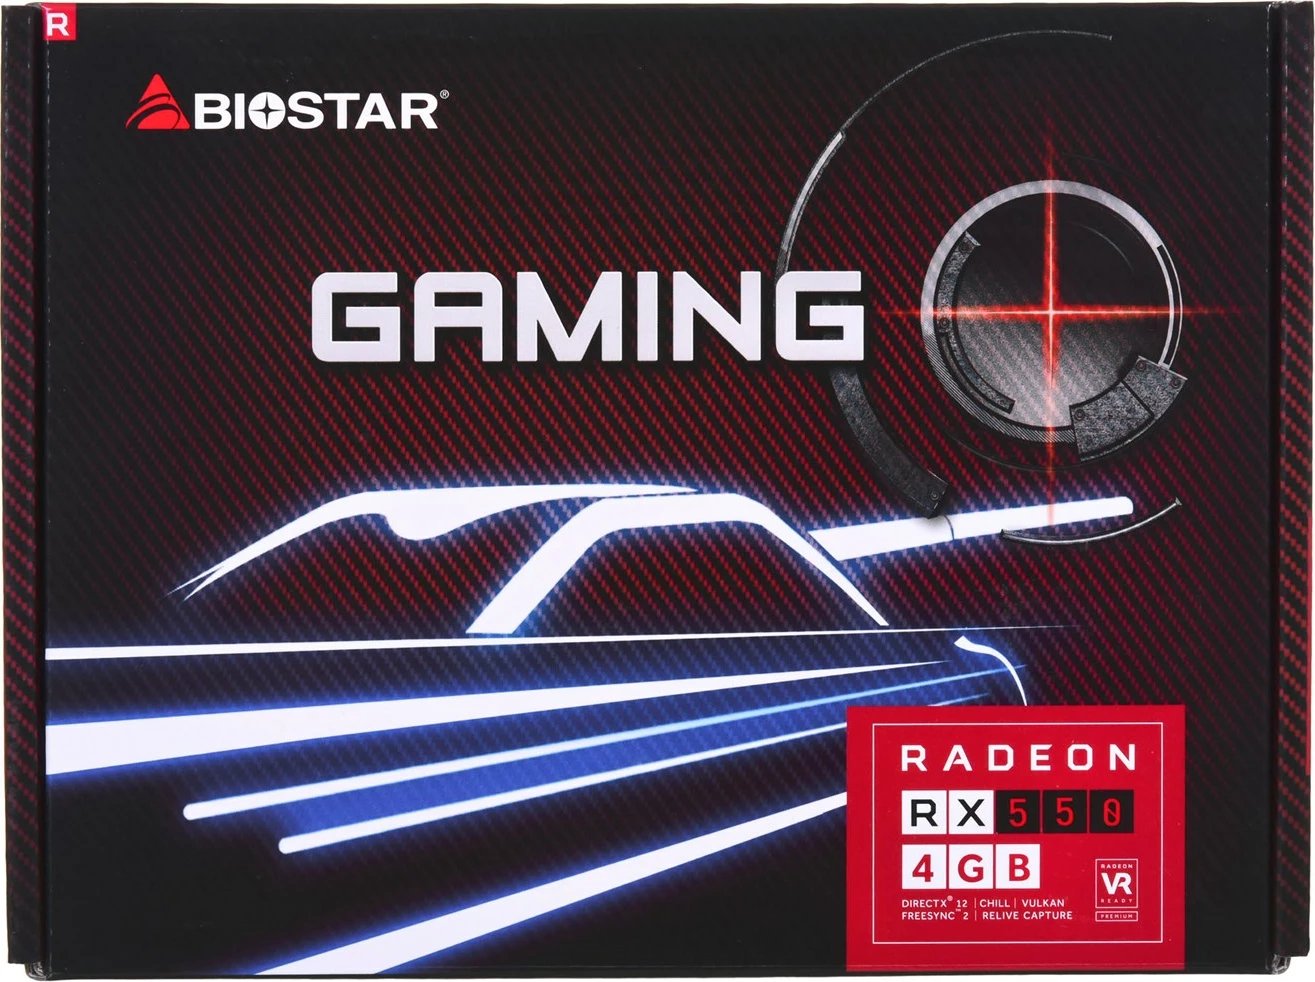 Kartë grafike Biostar Radeon RX550 AMD, 4 GB, GDDR5, e zezë